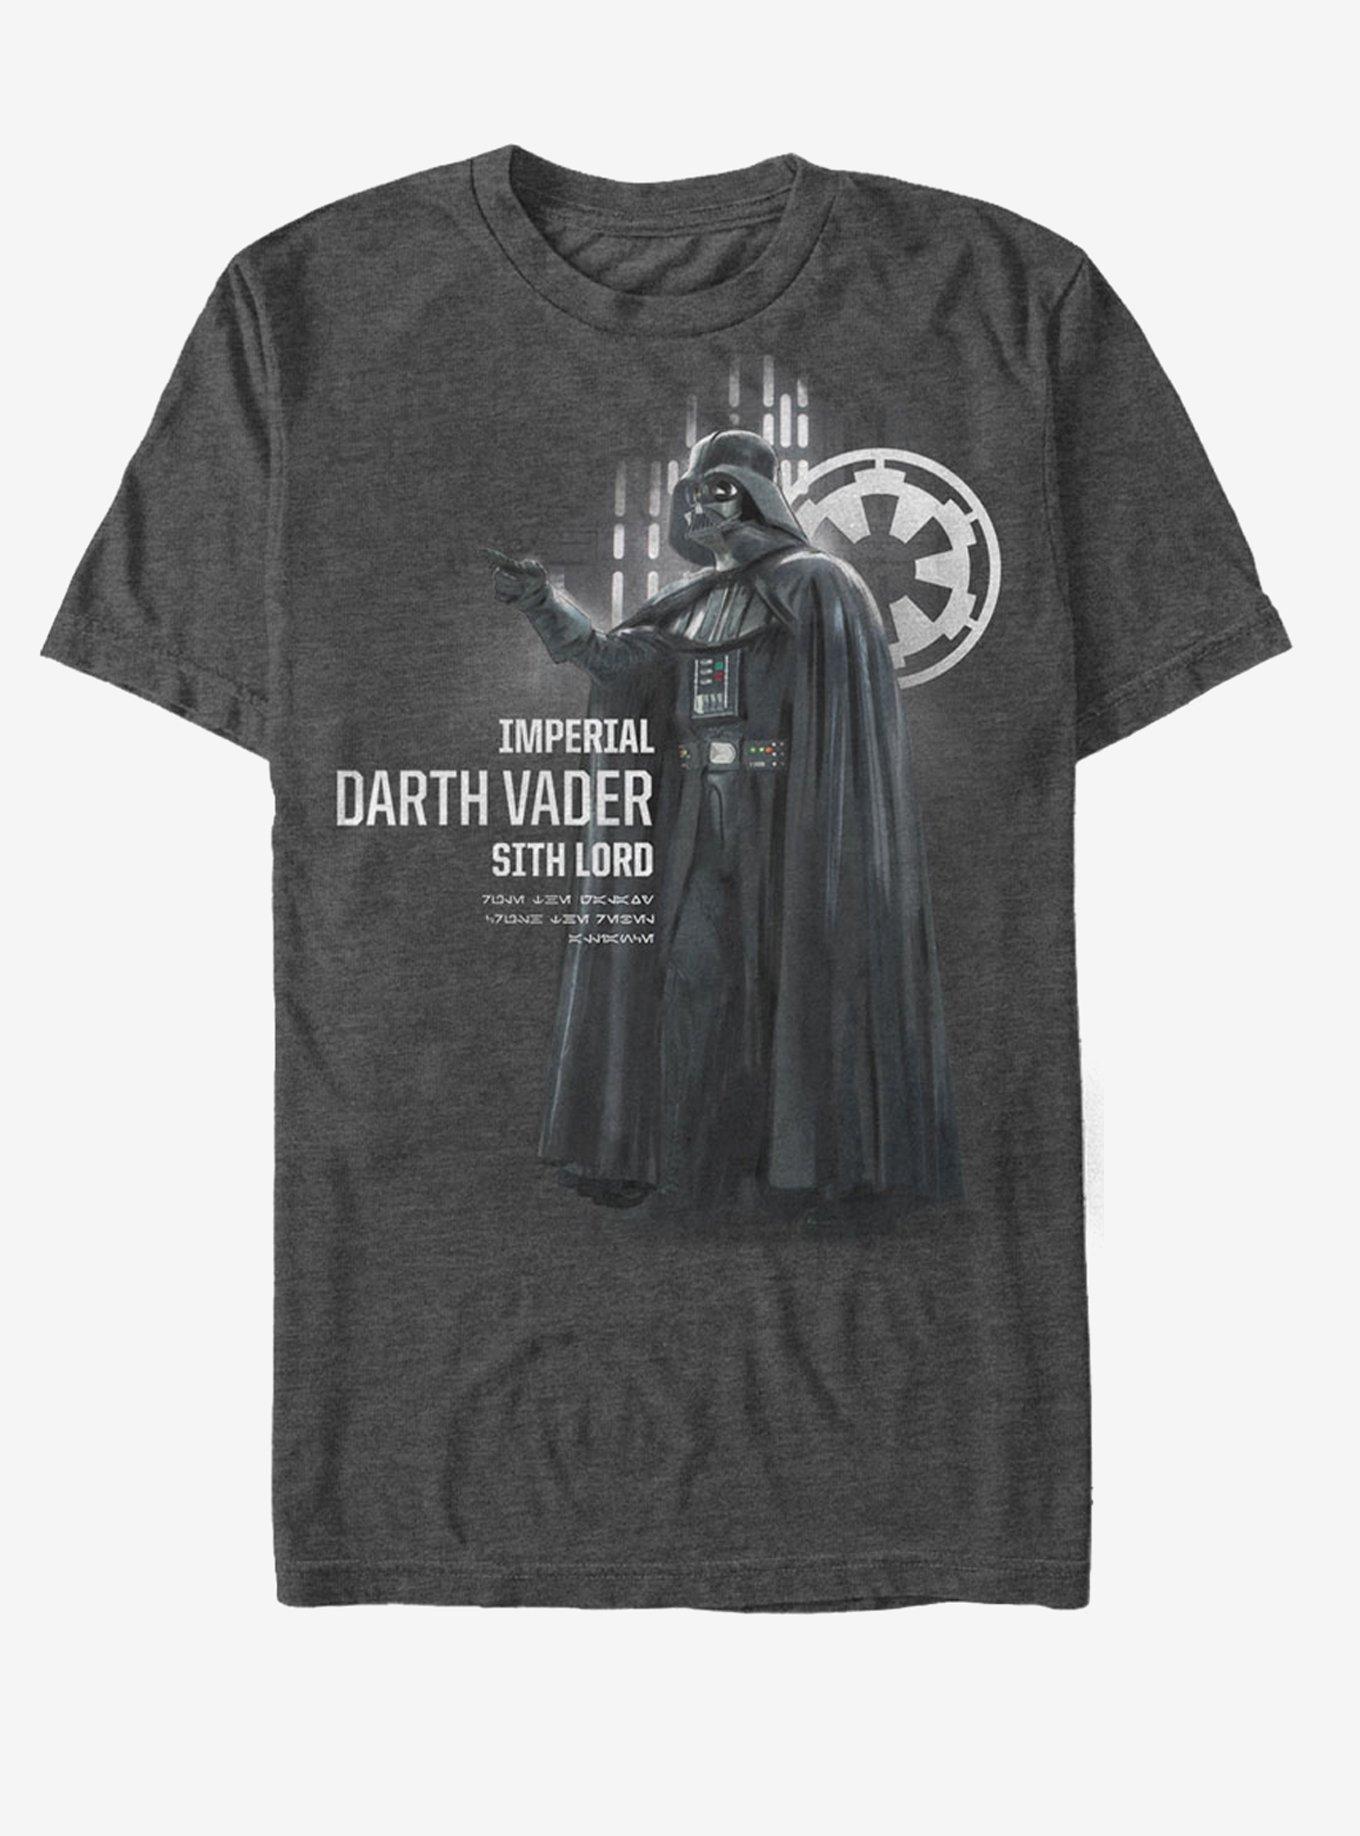 Star Wars Darth Vader sith lord Los Angeles Dodgers shirt, hoodie